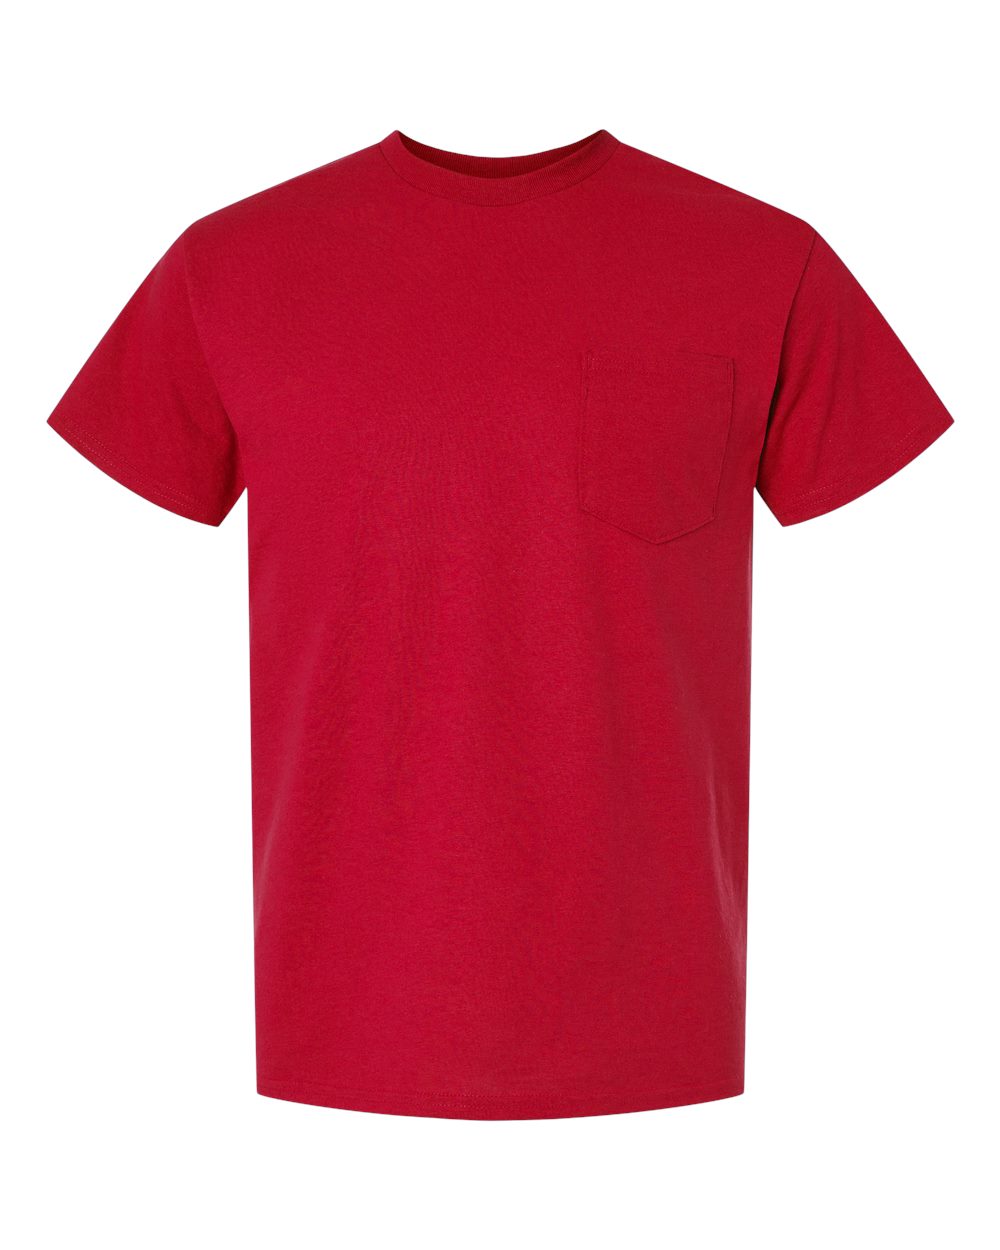 Gildan - DryBlend 50/50 T-Shirt with a Pocket - 8300 | eBay